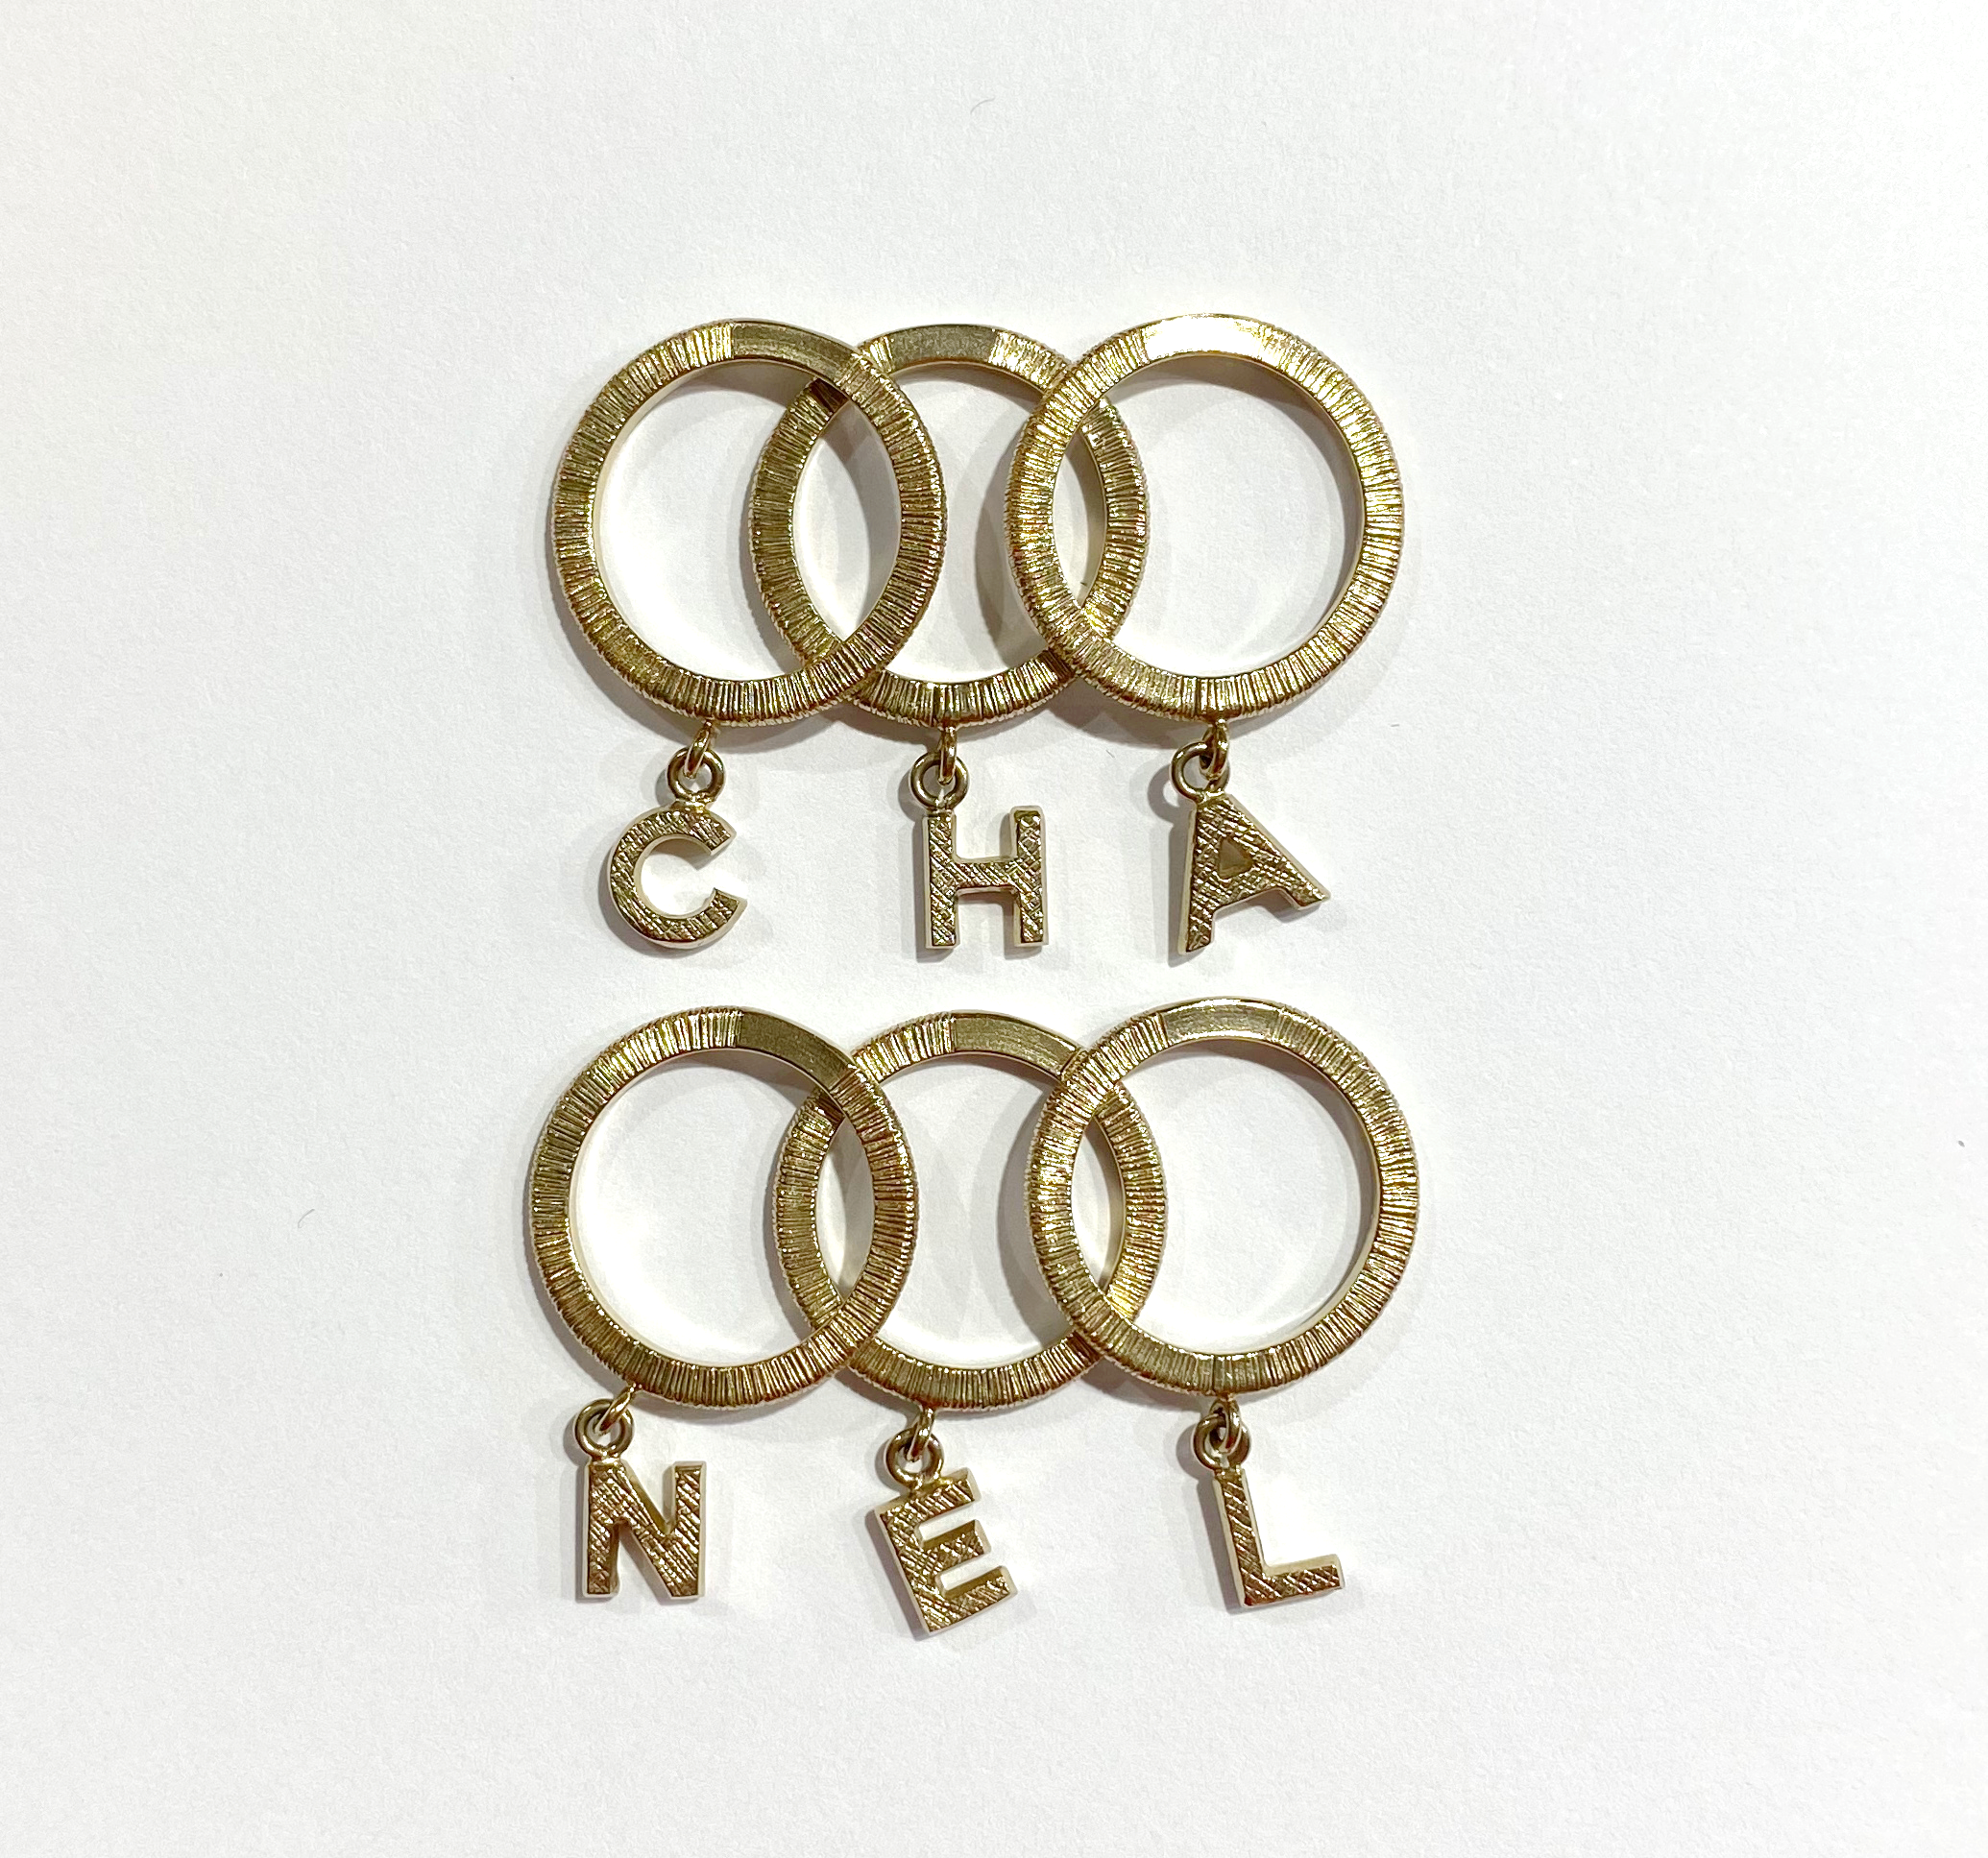 Chanel Letter Charm Ring Set